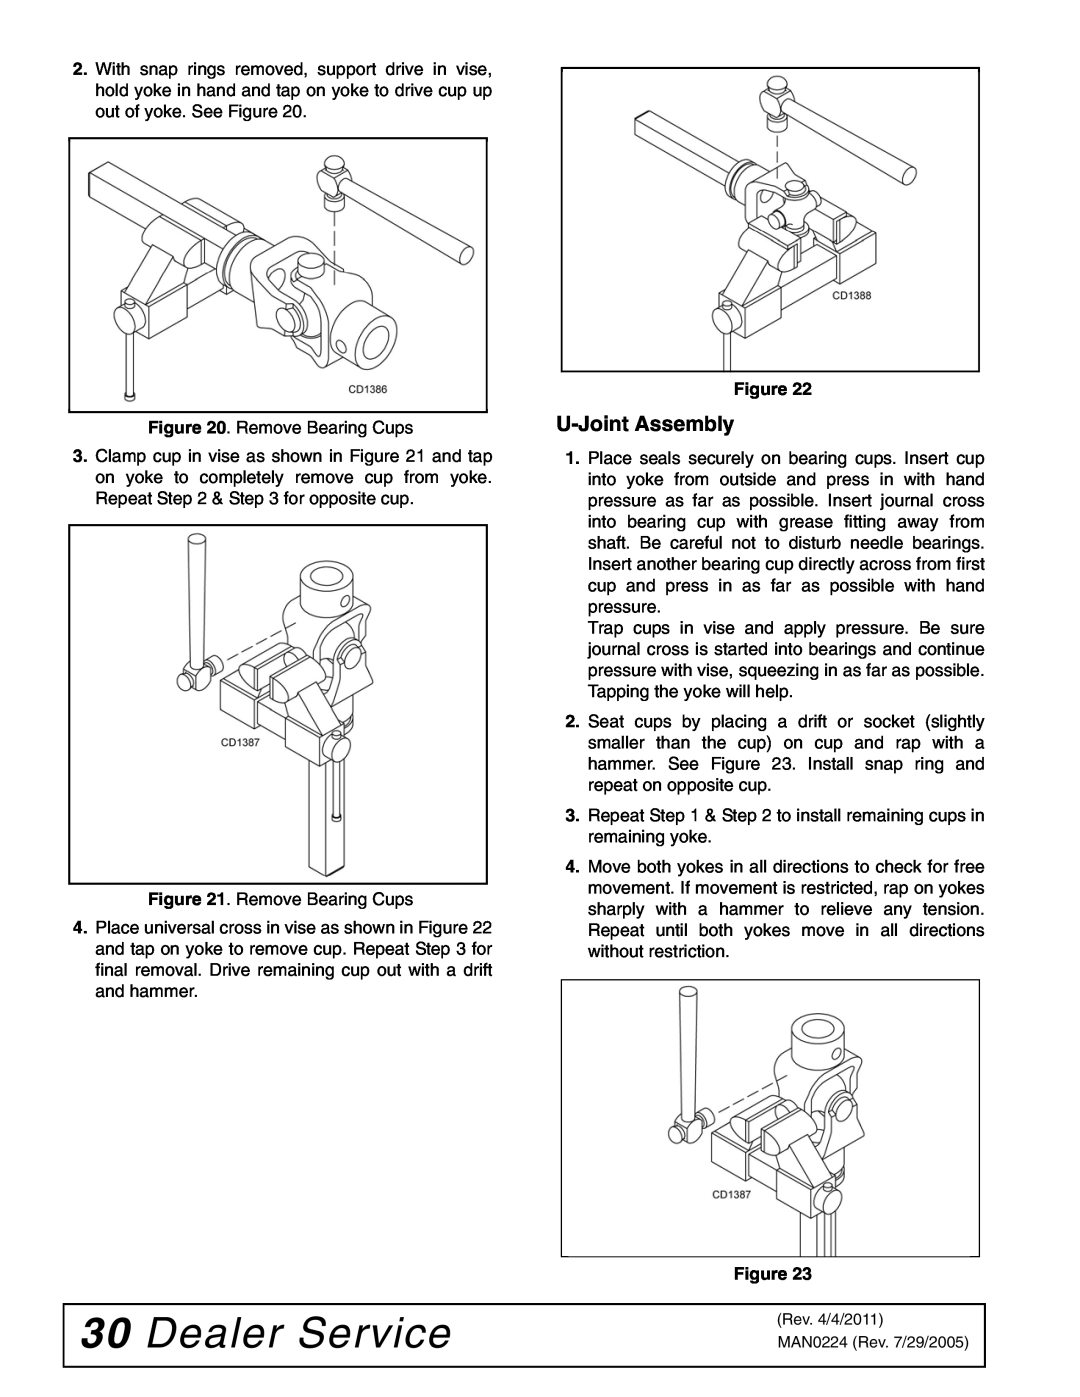 Woods Equipment RCC42 manual Dealer Service, U-JointAssembly 